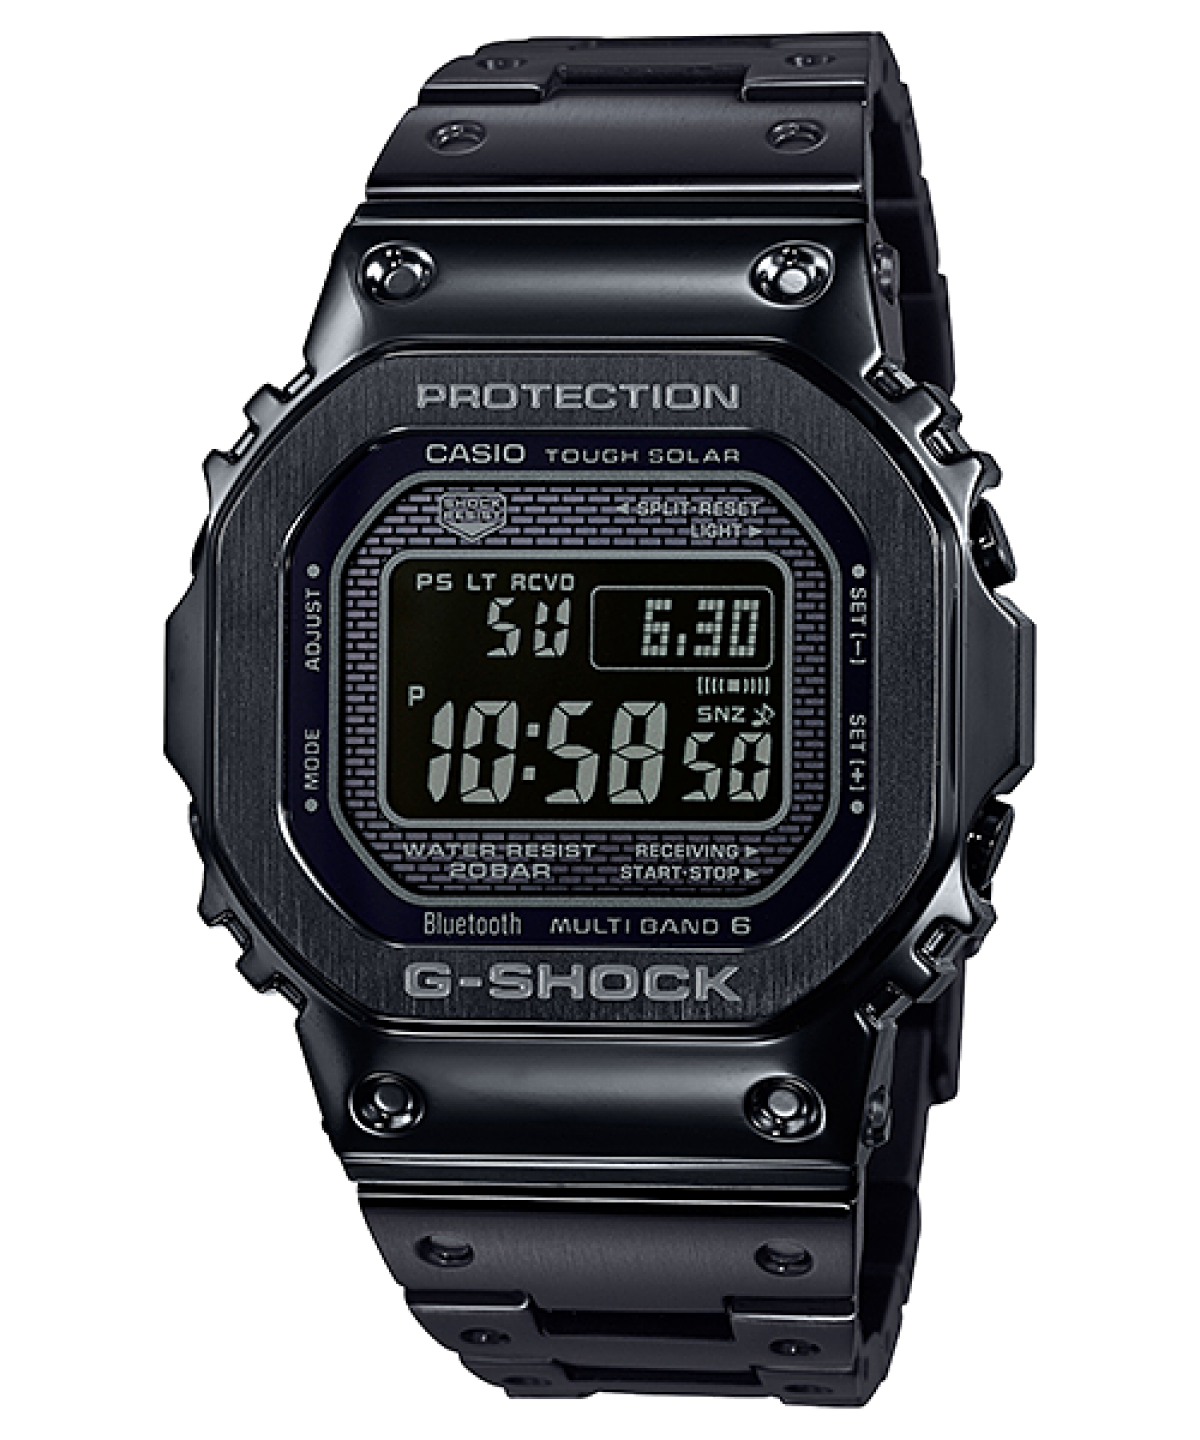 Watch - Casio G-Shock GMWB5000GD-1 Full Metal Black, $360 - Casio.com